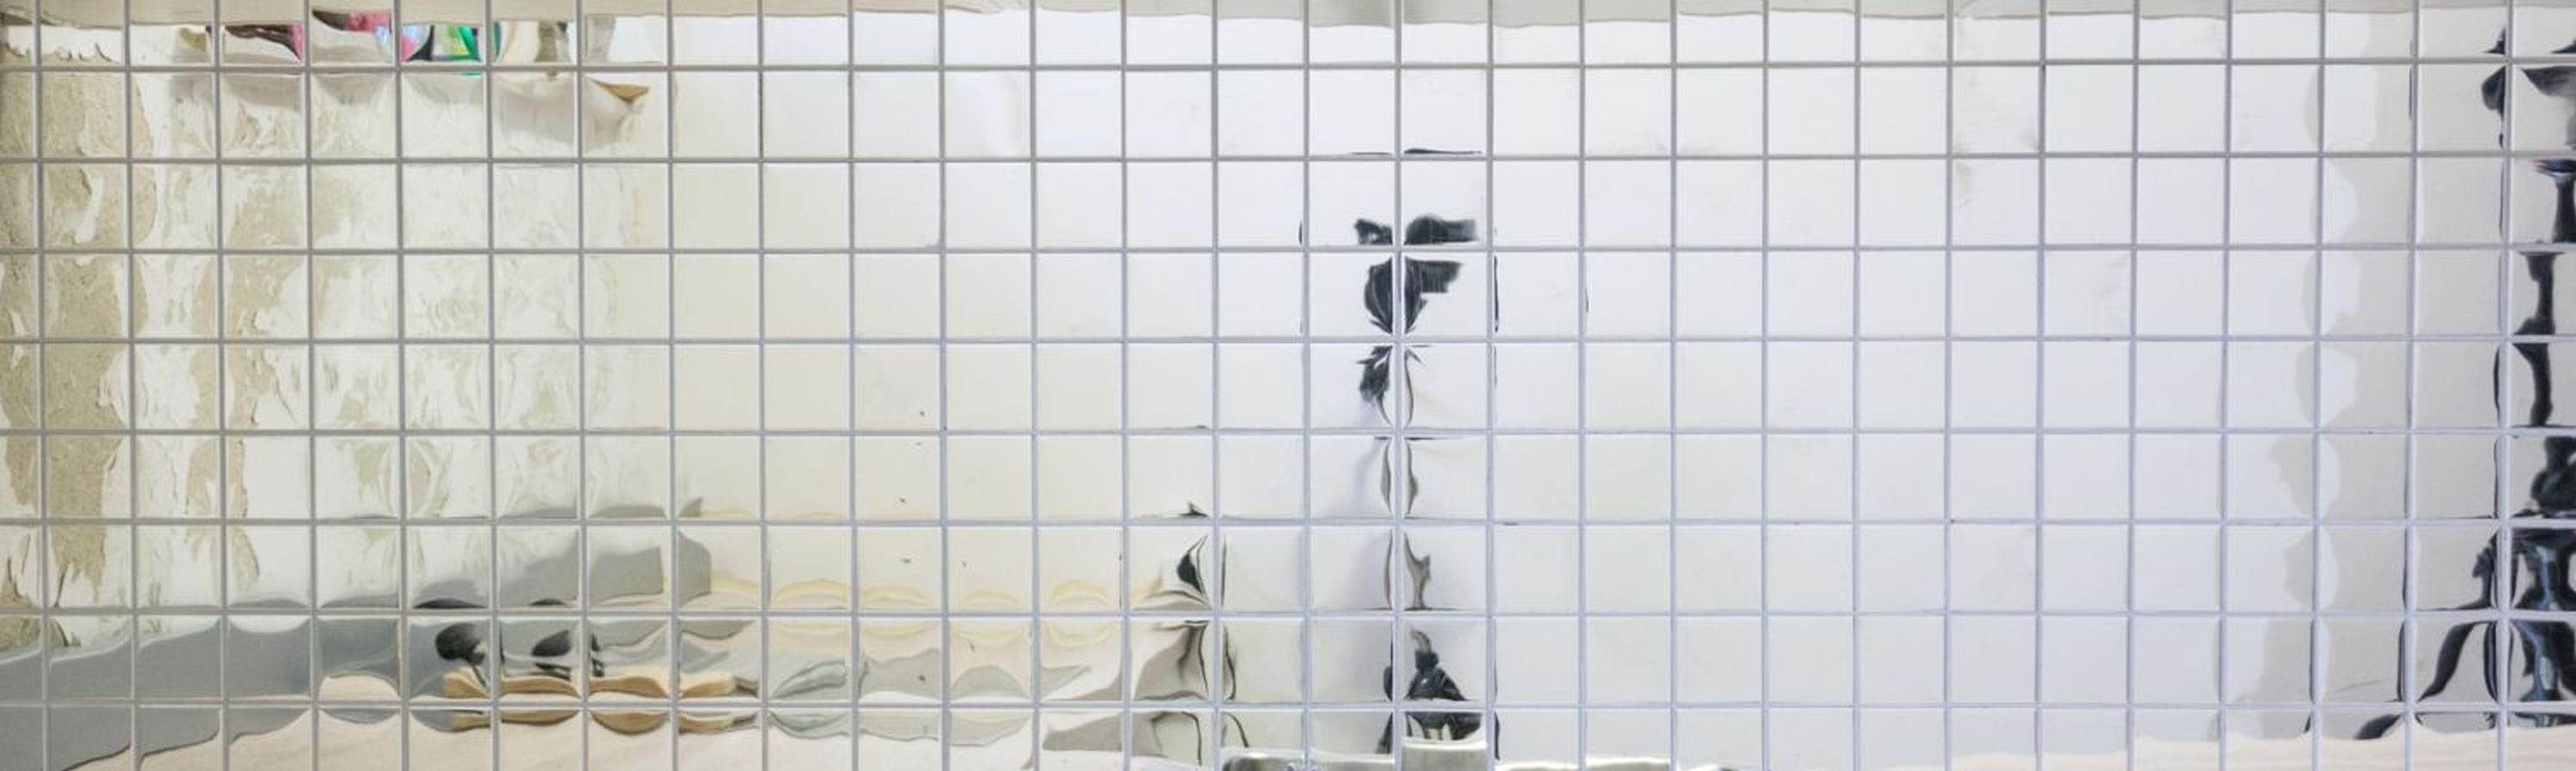 Küchenwand Mosani Mosaik Fliesenspiegel Mosaikfliesen silber Fliese Edelstahl glänzend